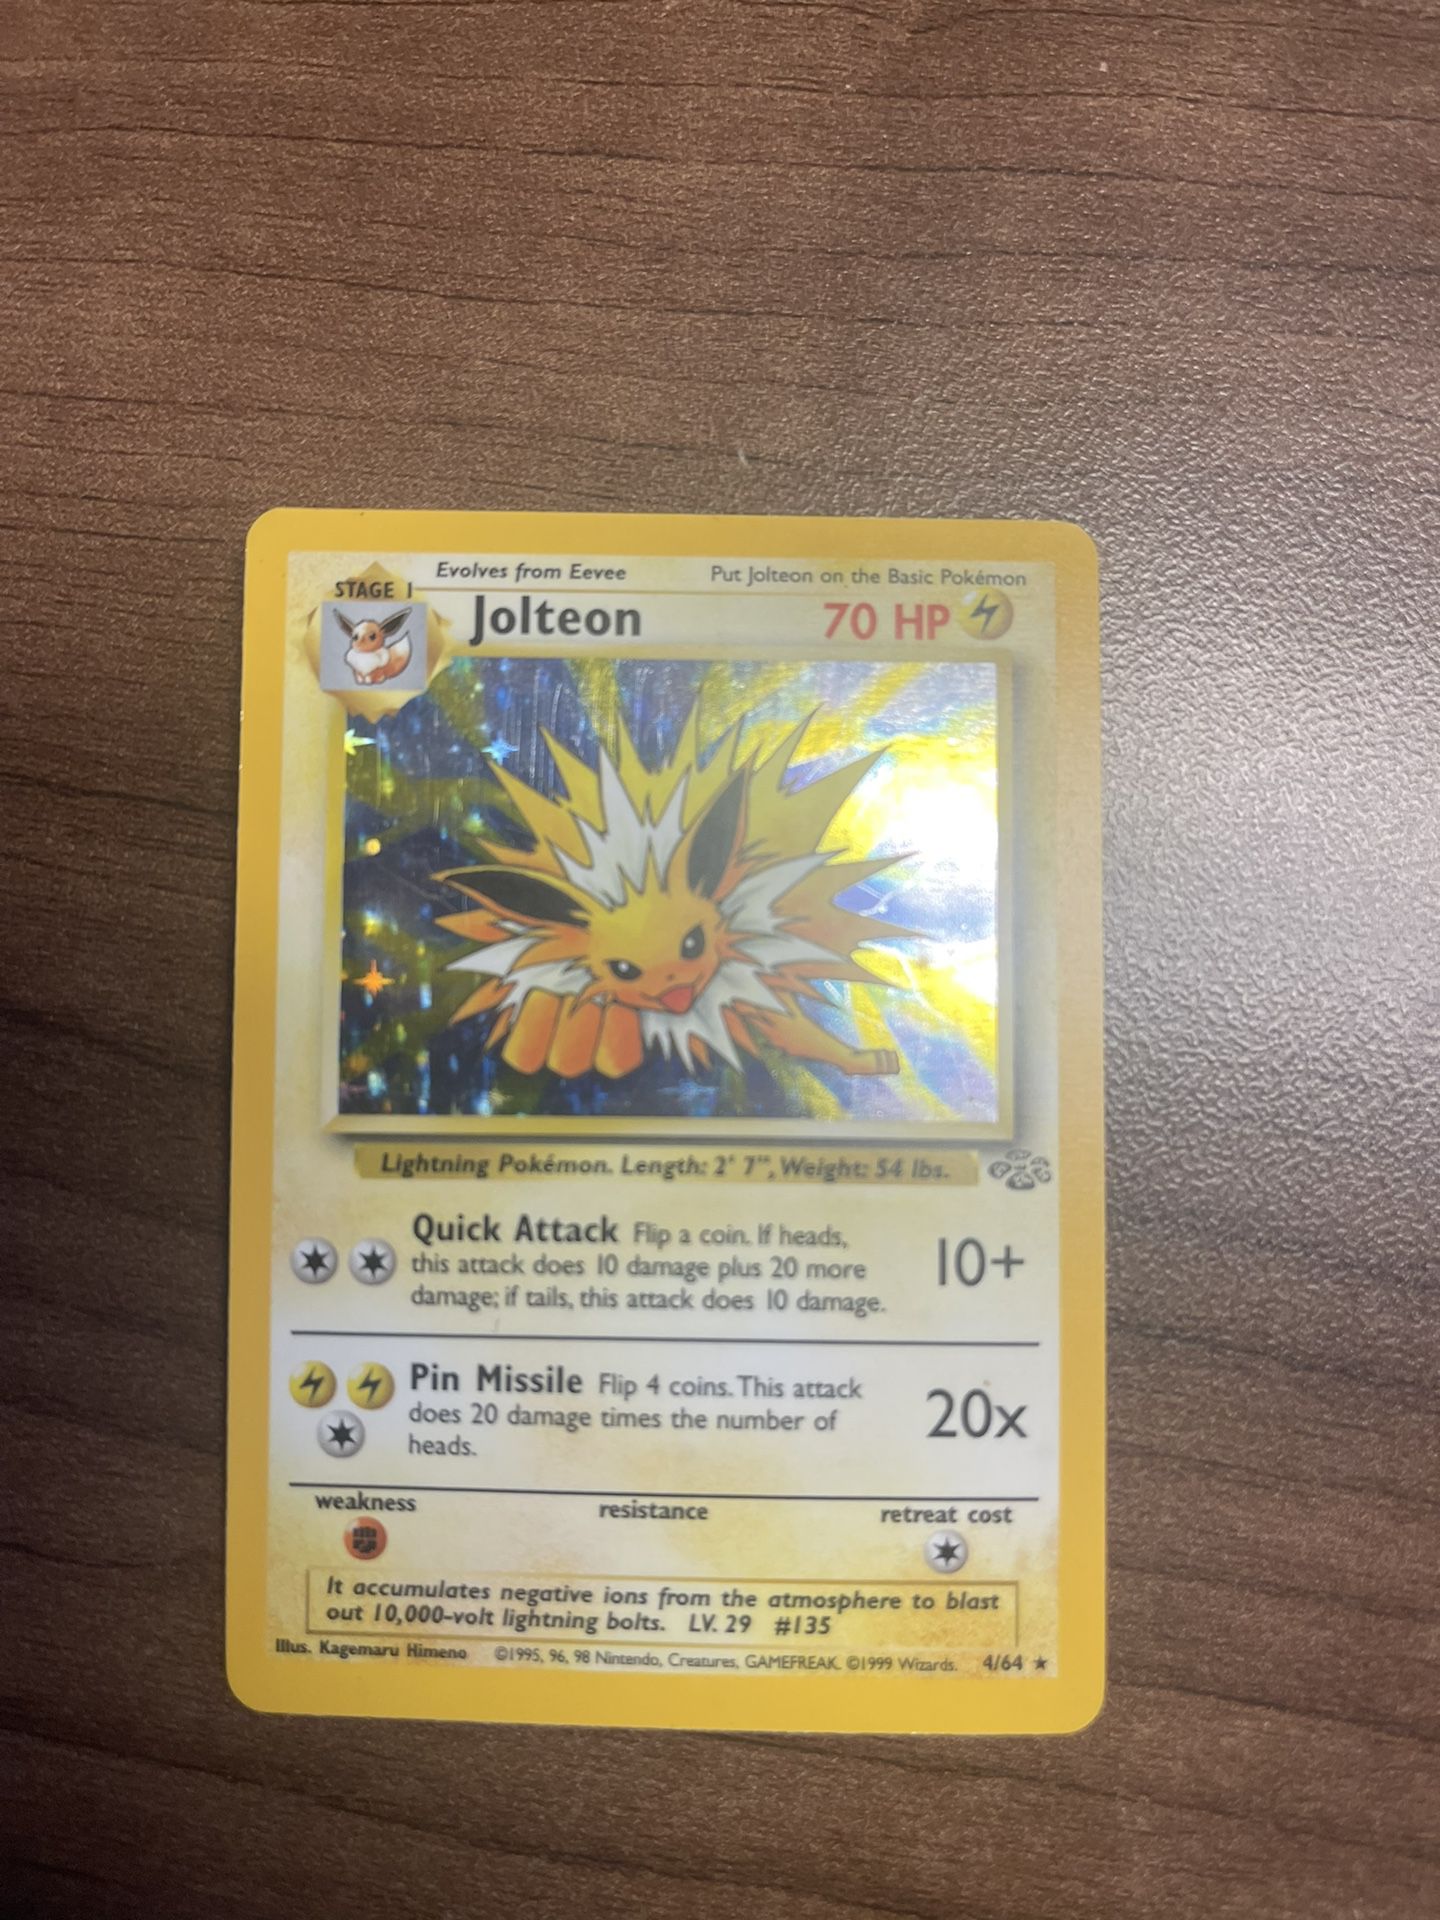 Rare near mint holographic jungle edition Jolteon Pokemon card! 4/64 